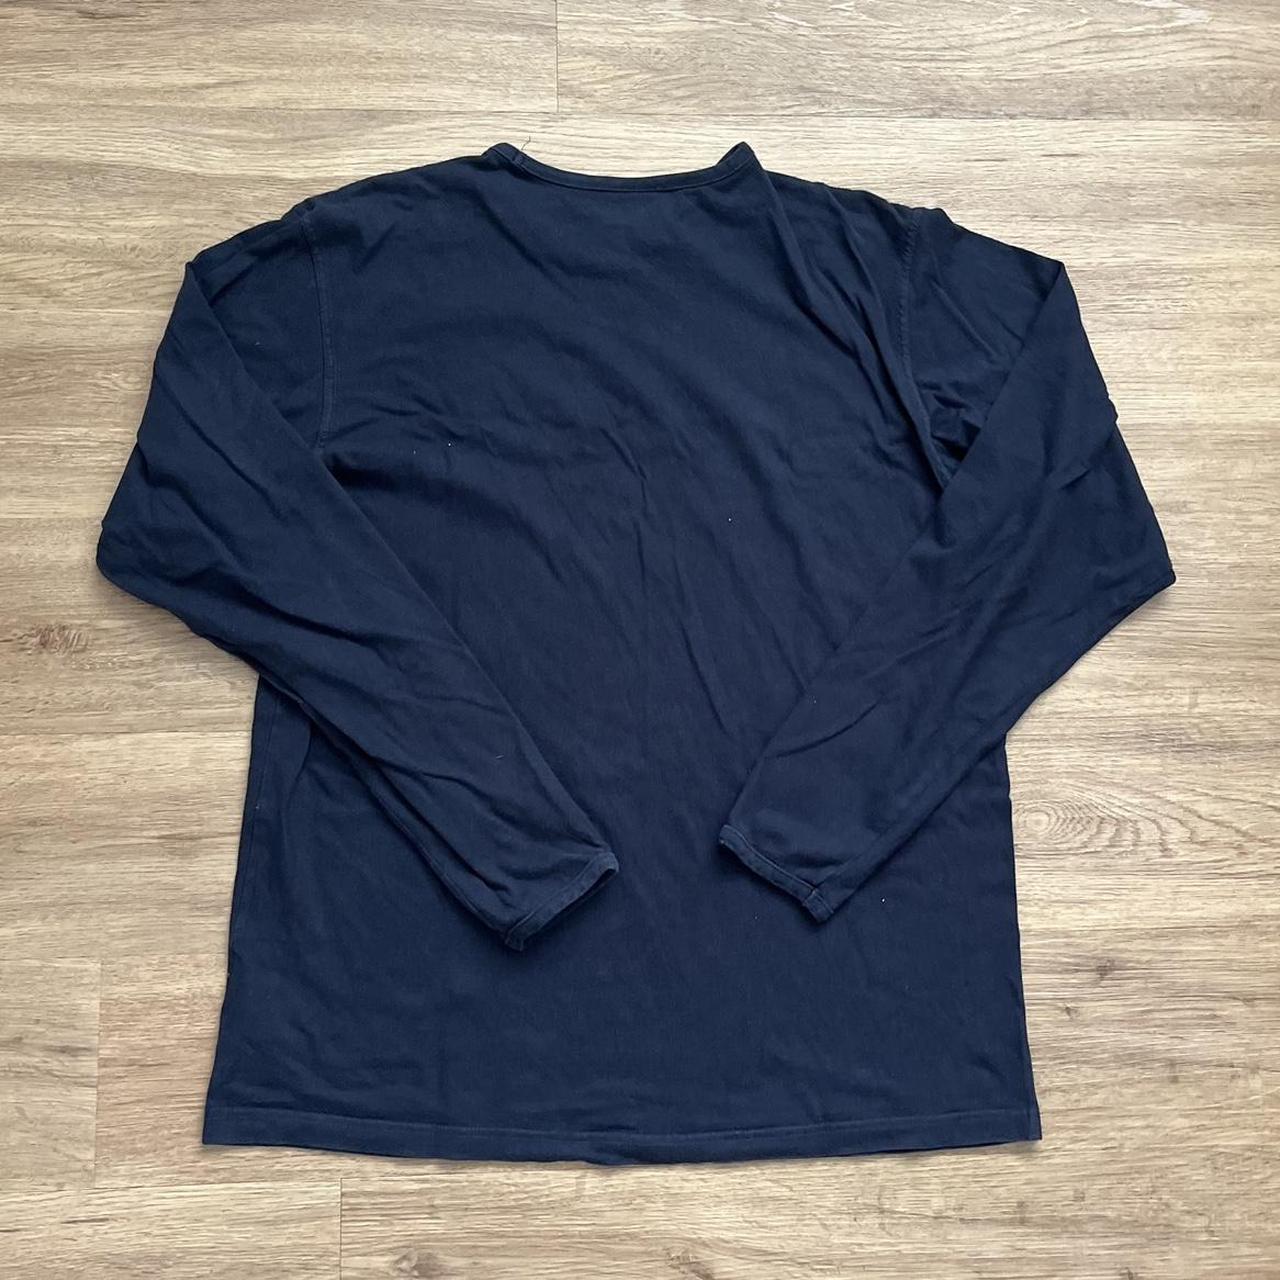 Dark Navy Retro Nike Long Sleeve T-Shirt 📦 FREE... - Depop